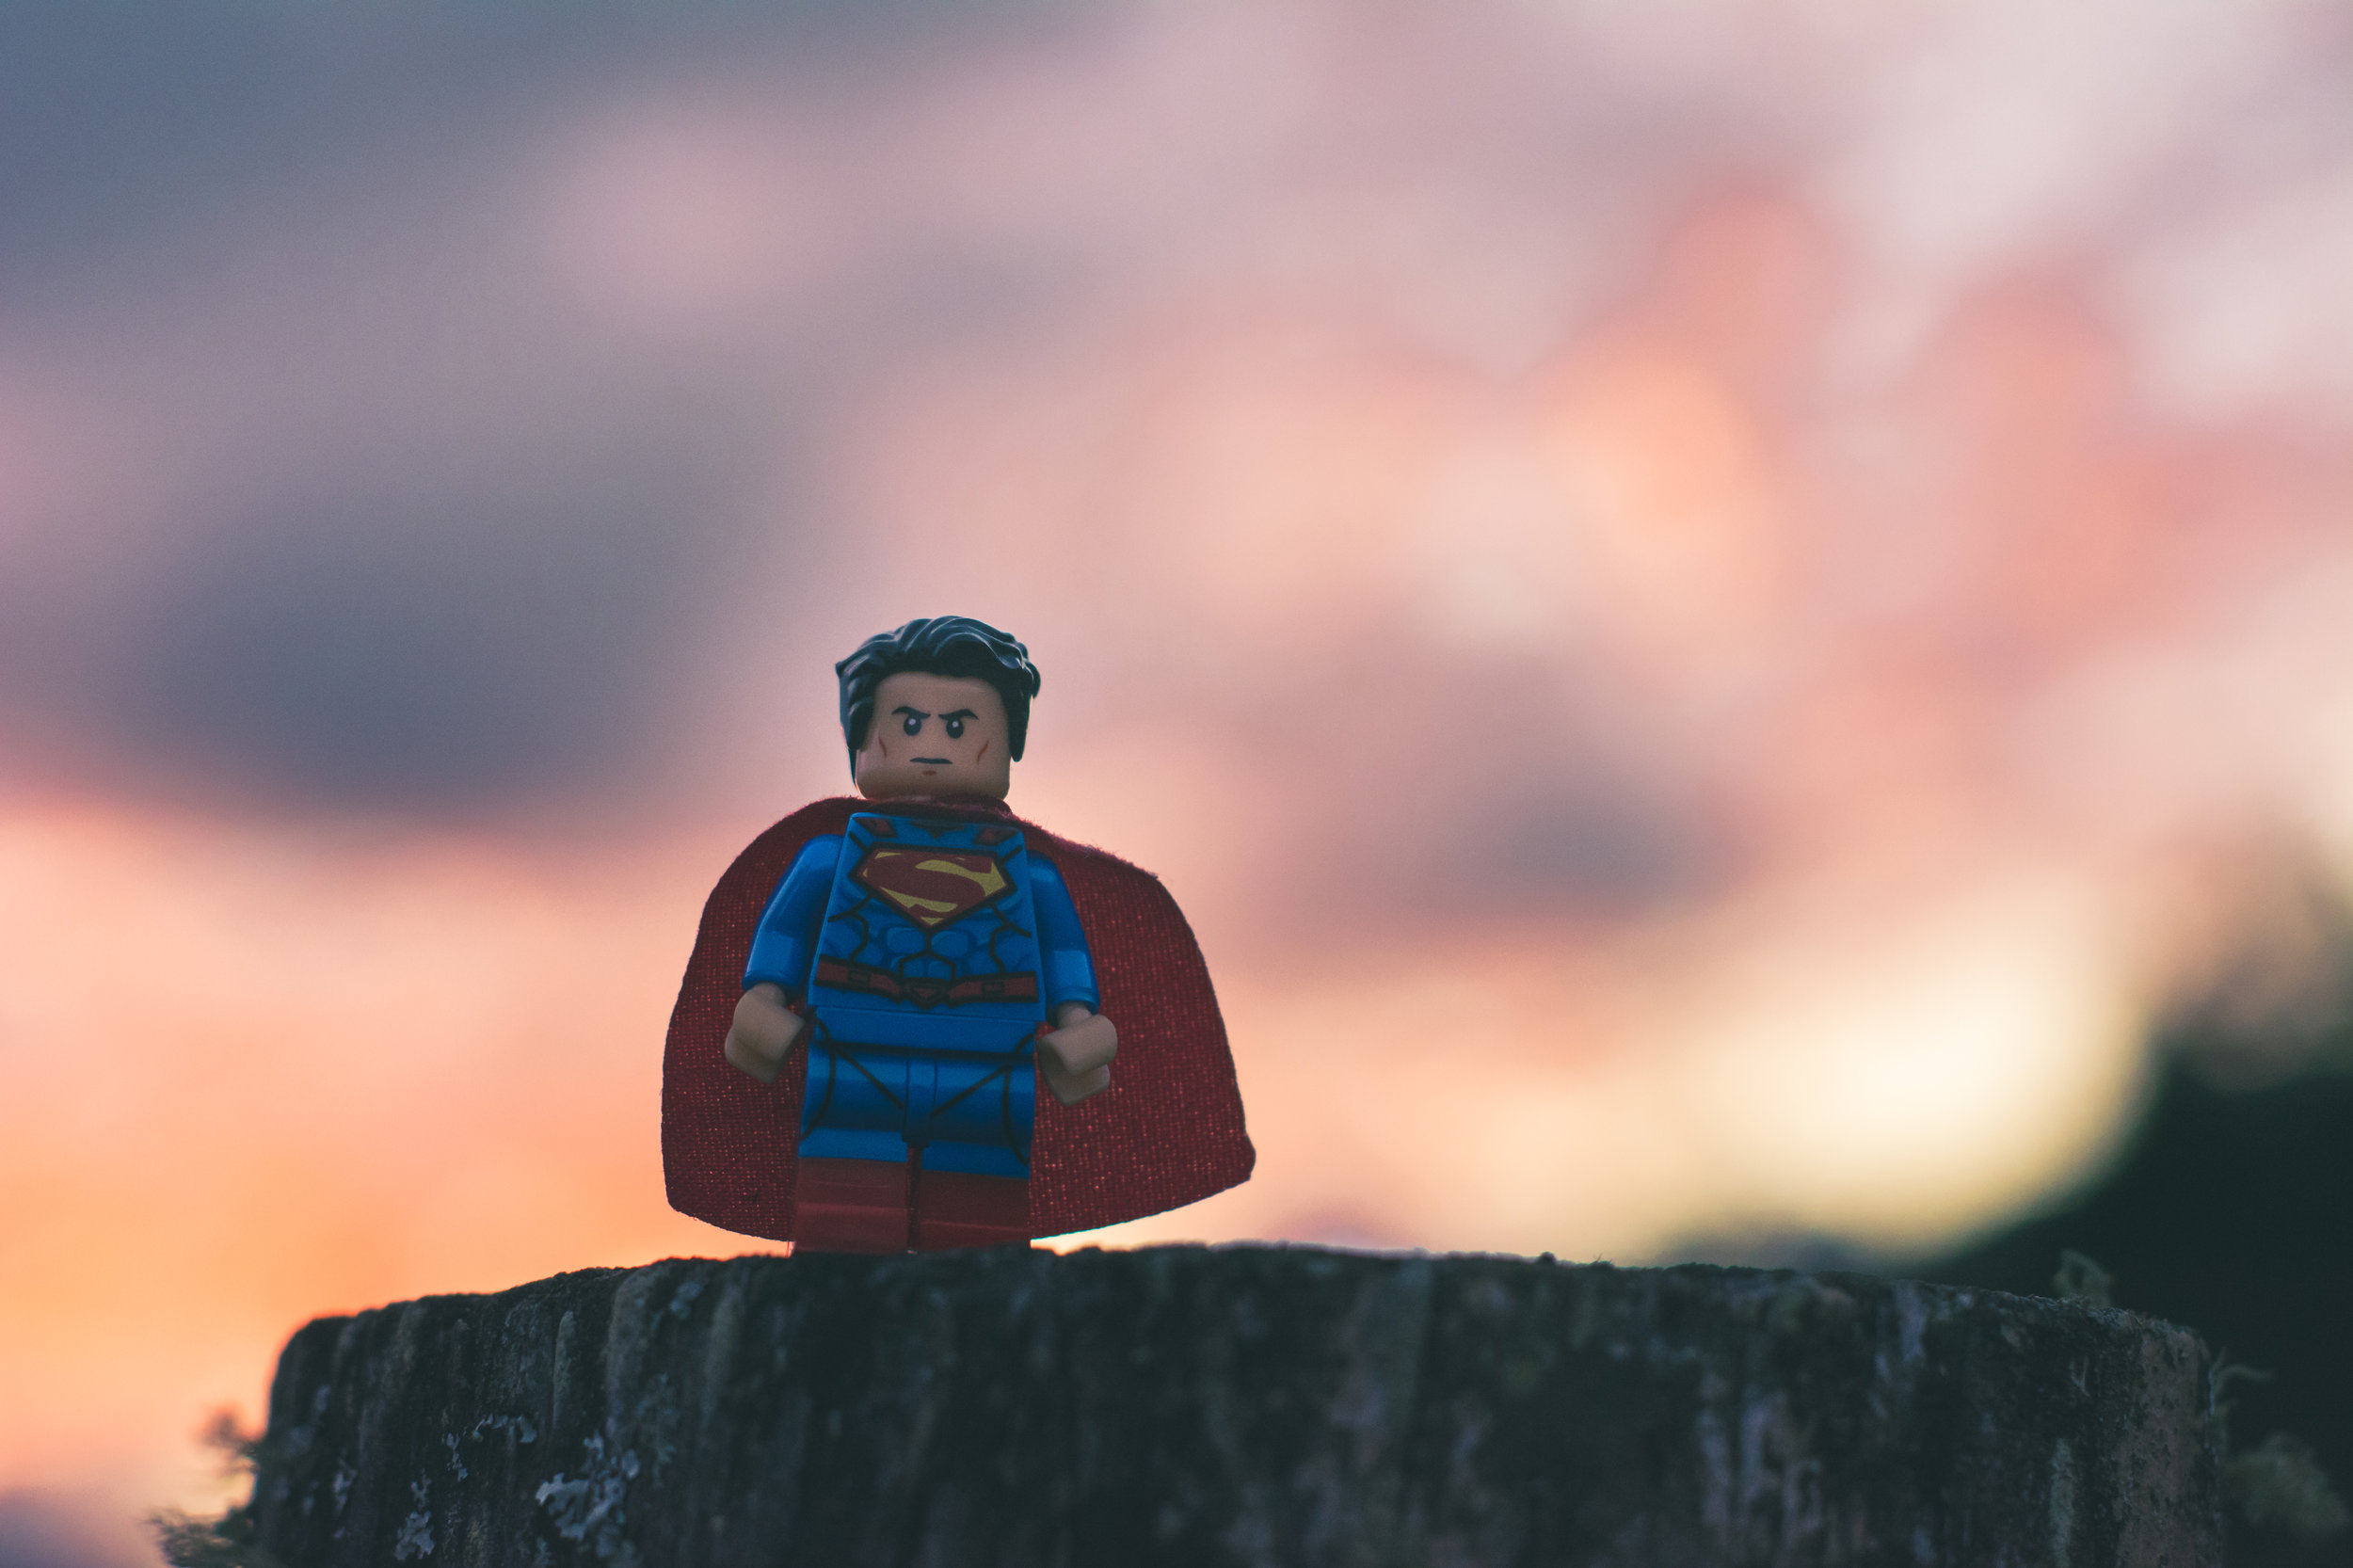 Superman Lego